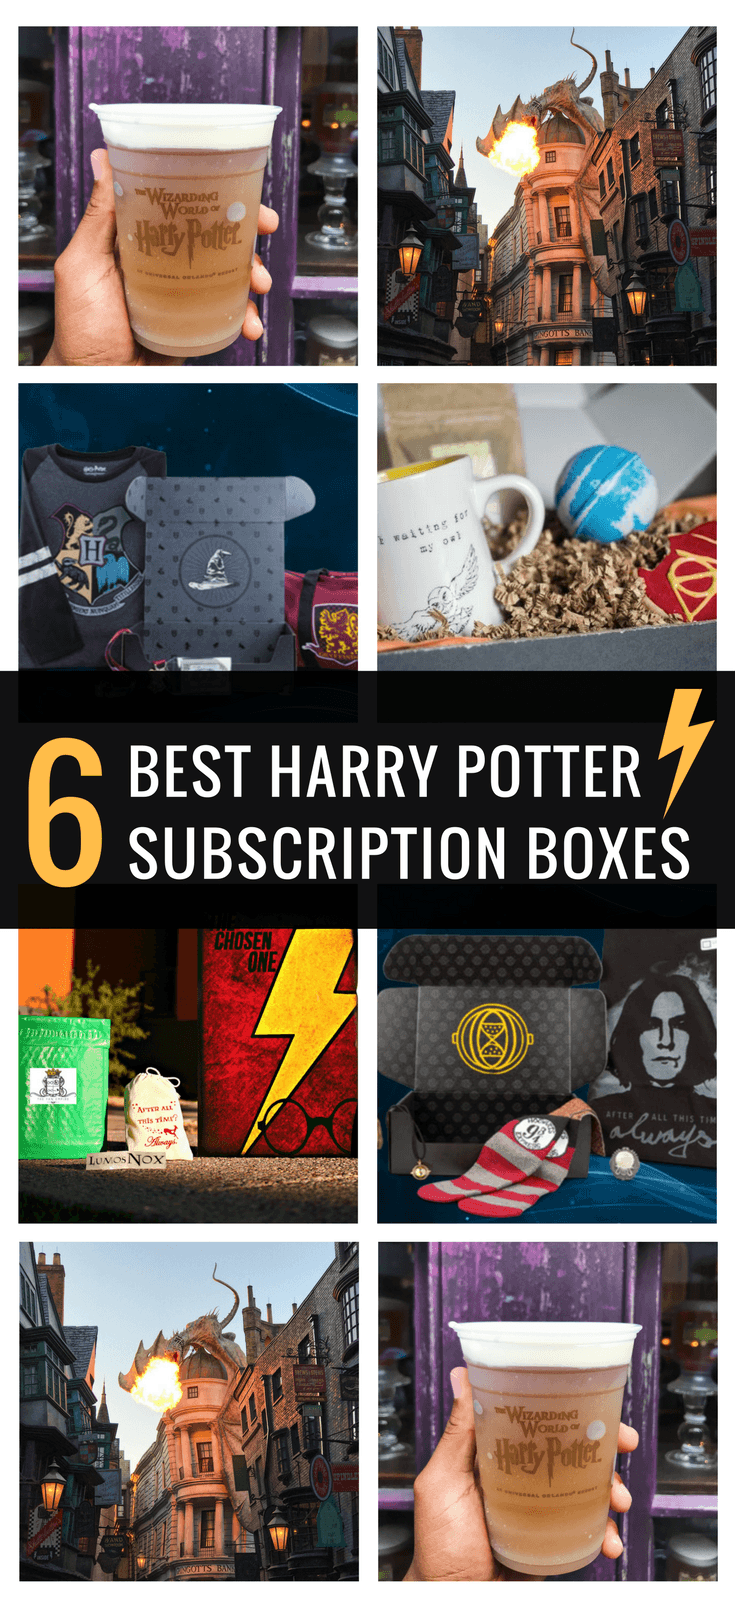 Best Harry Potter Subscription Boxes